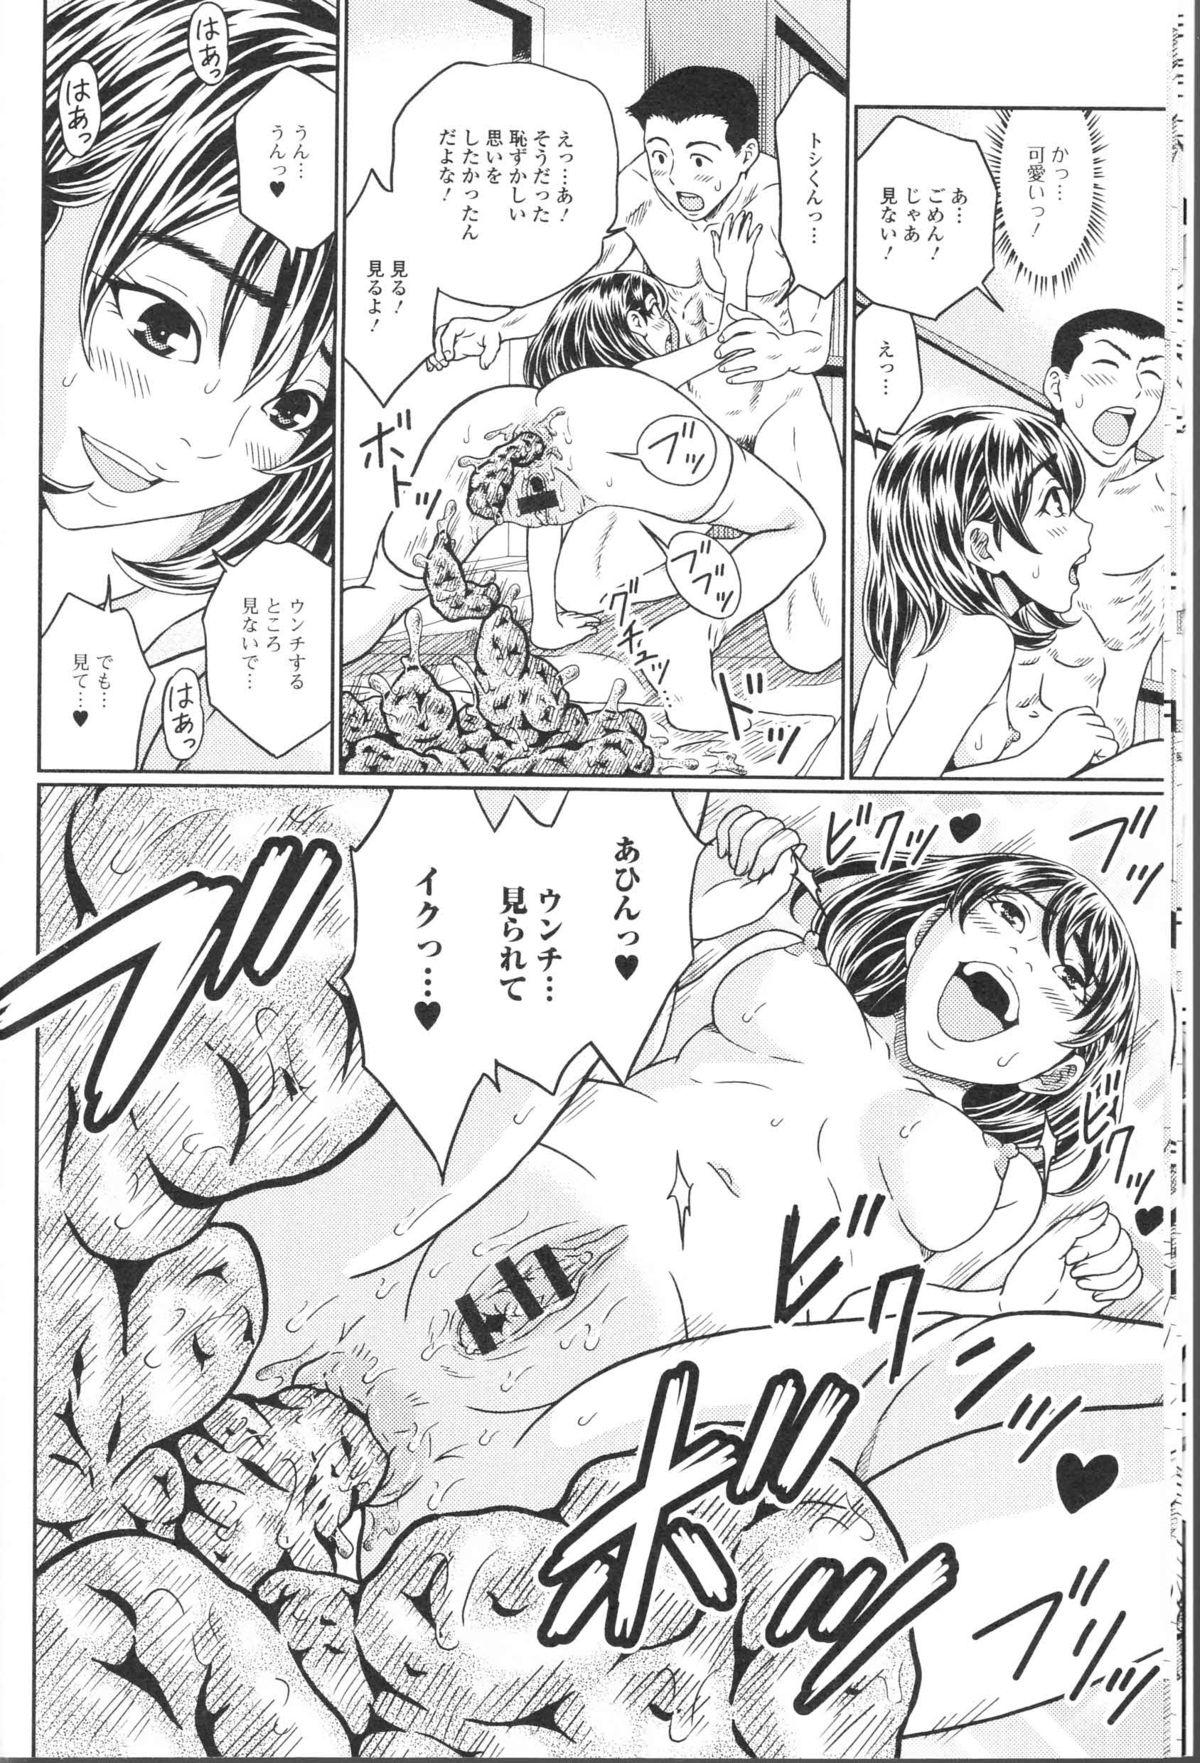 Deepthroat Nozoite wa Ikenai NEO! II - Do Not Peep NEO! II Friend - Page 12